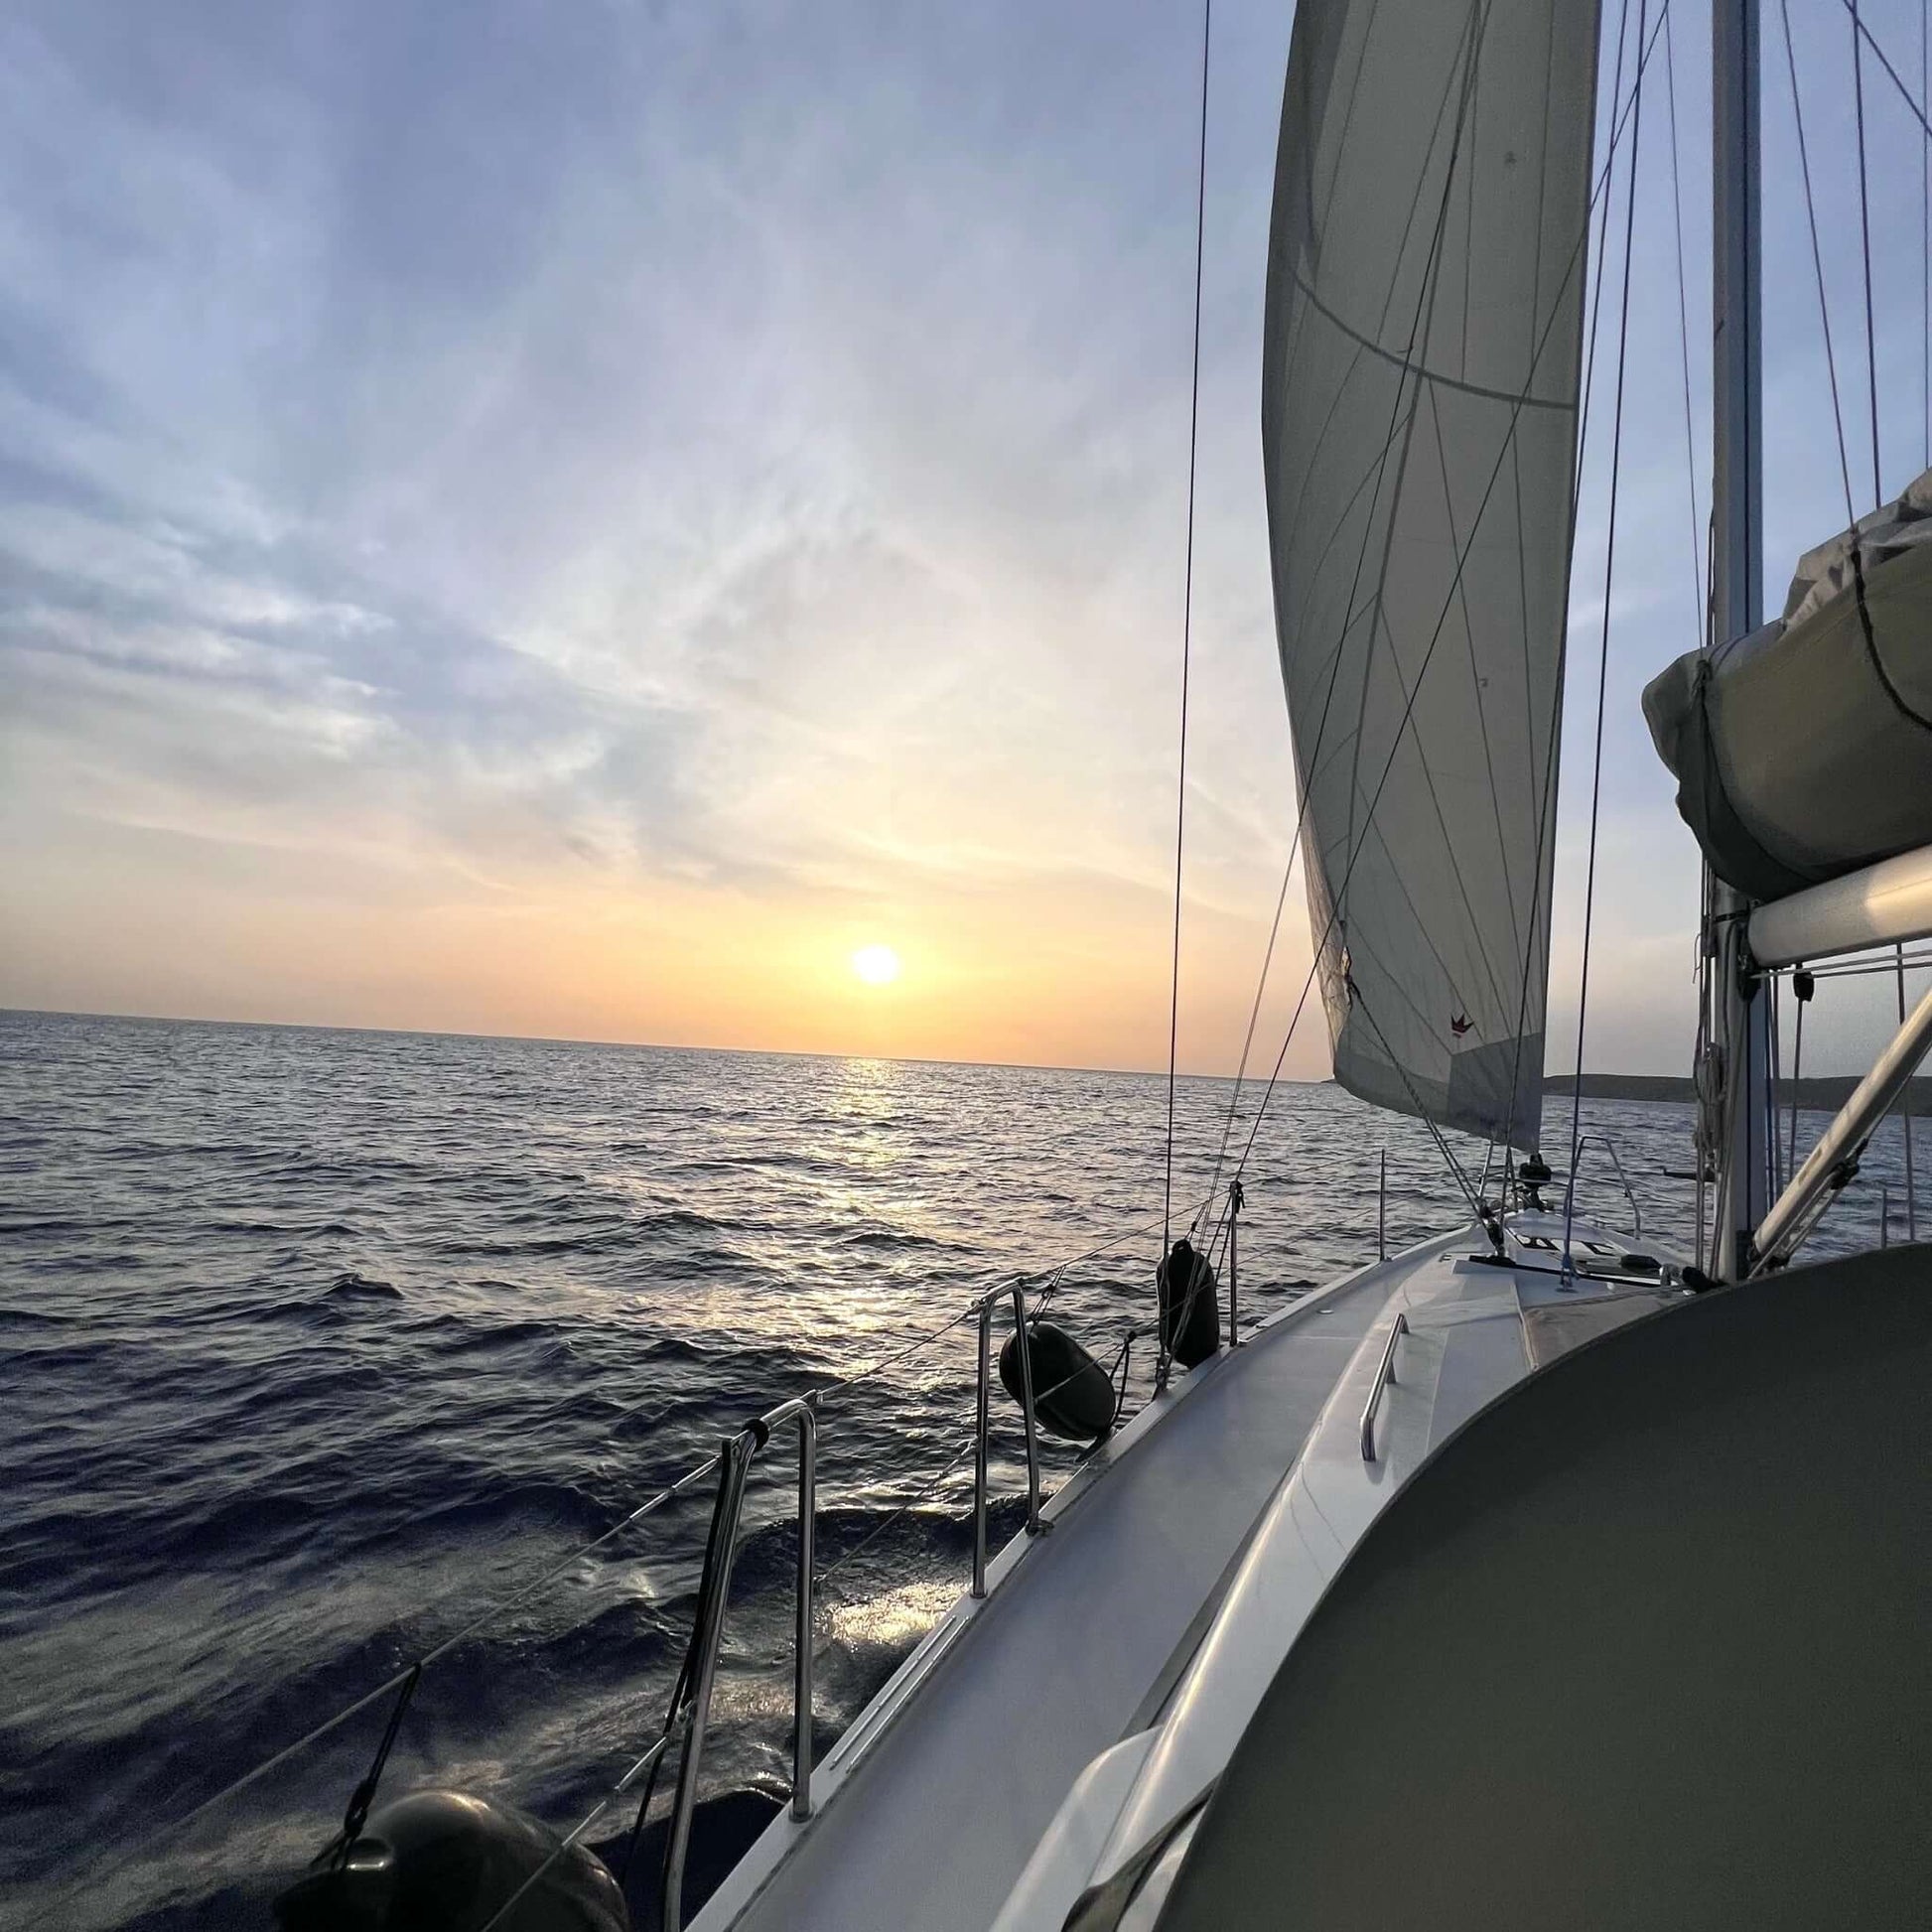 sunset cruise sailing boaqt